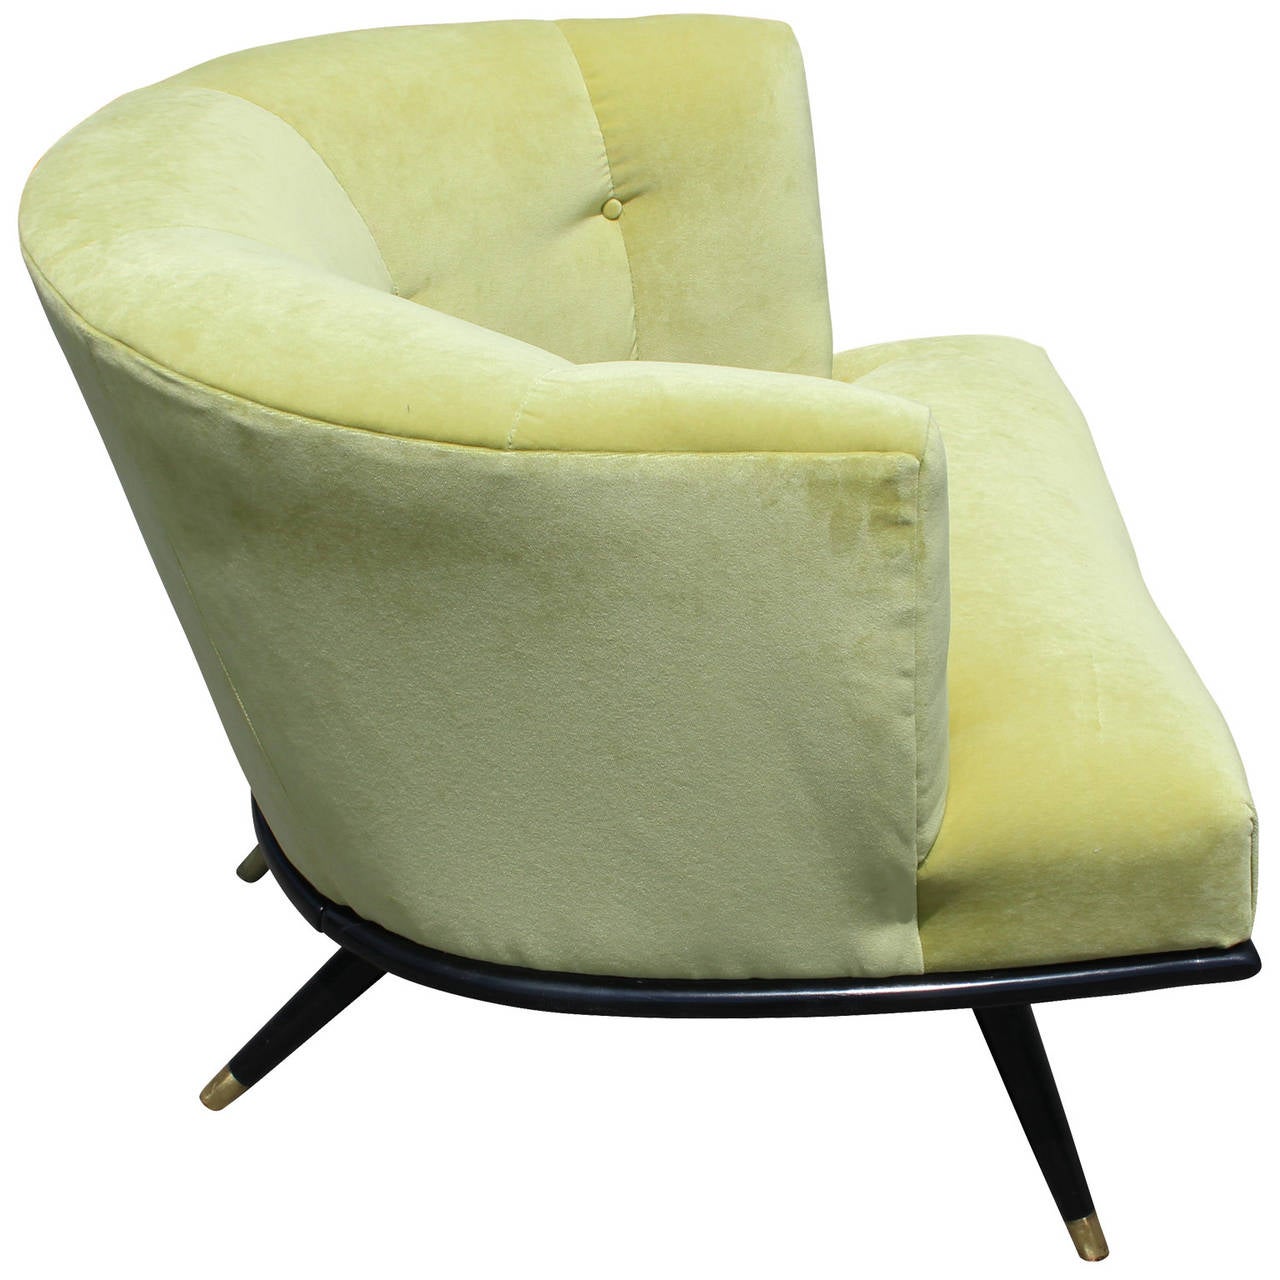 European Modern Italian Style Barrel Back Chair in Green Velvet with Lacquered Base